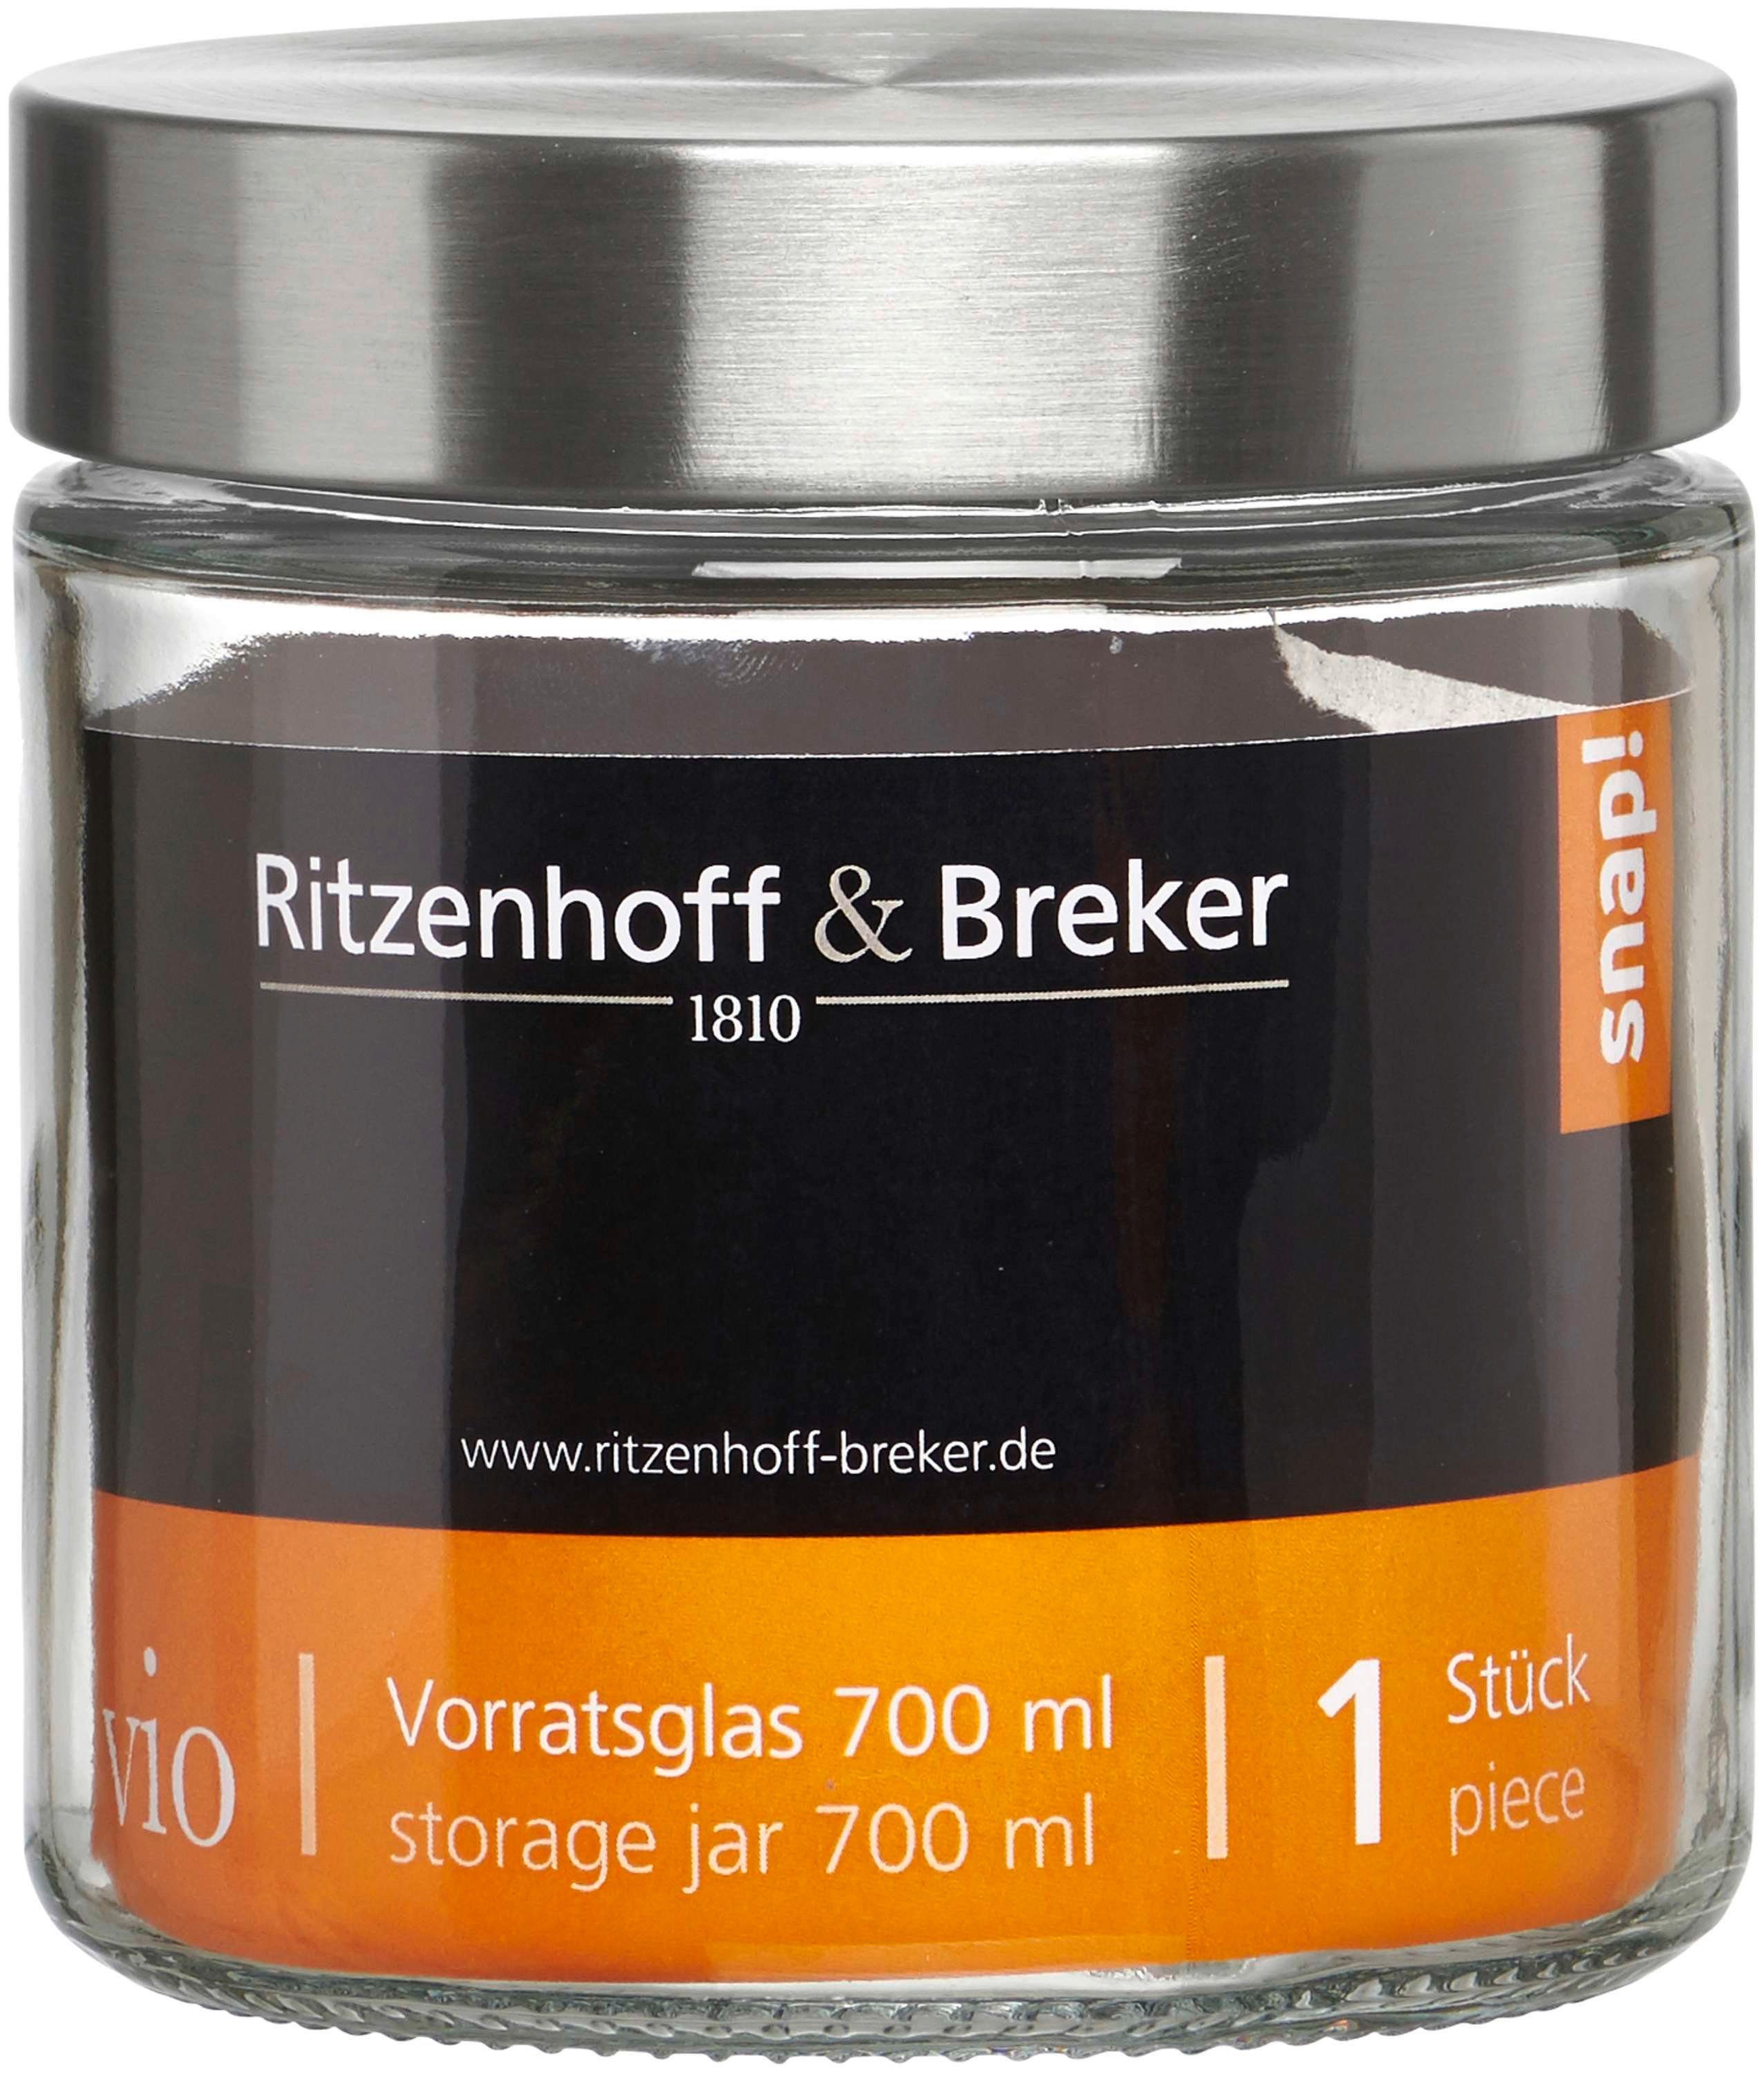 Glas Ritzenhoff & Breker rund Vorratsglas Vio 700ml 812077, Vorratsdose glatt